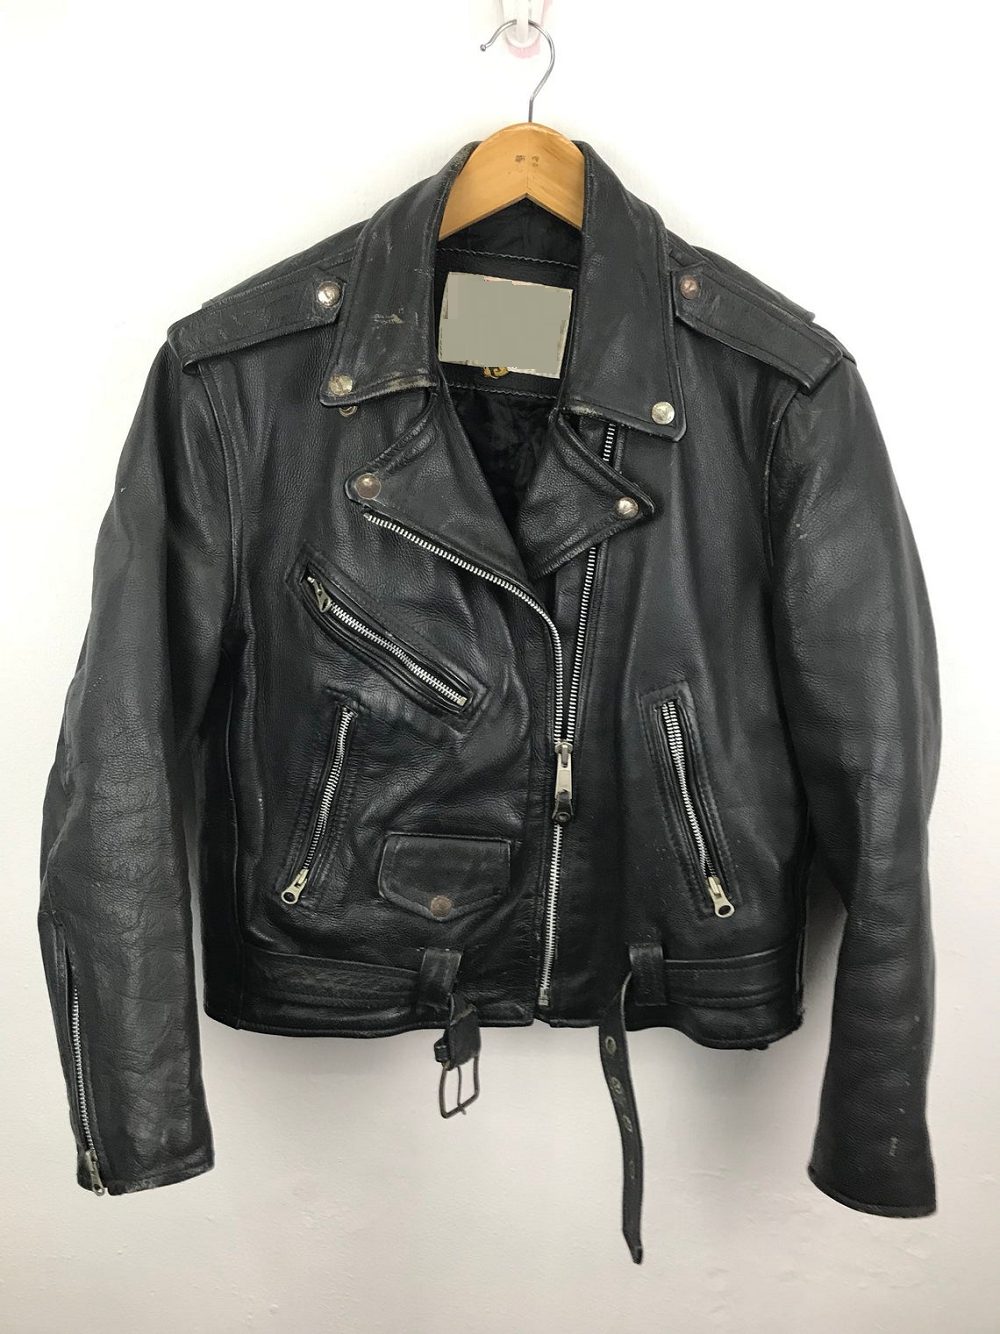 Mens Vanguard Biker Leather Jacket - AirBorne Jacket